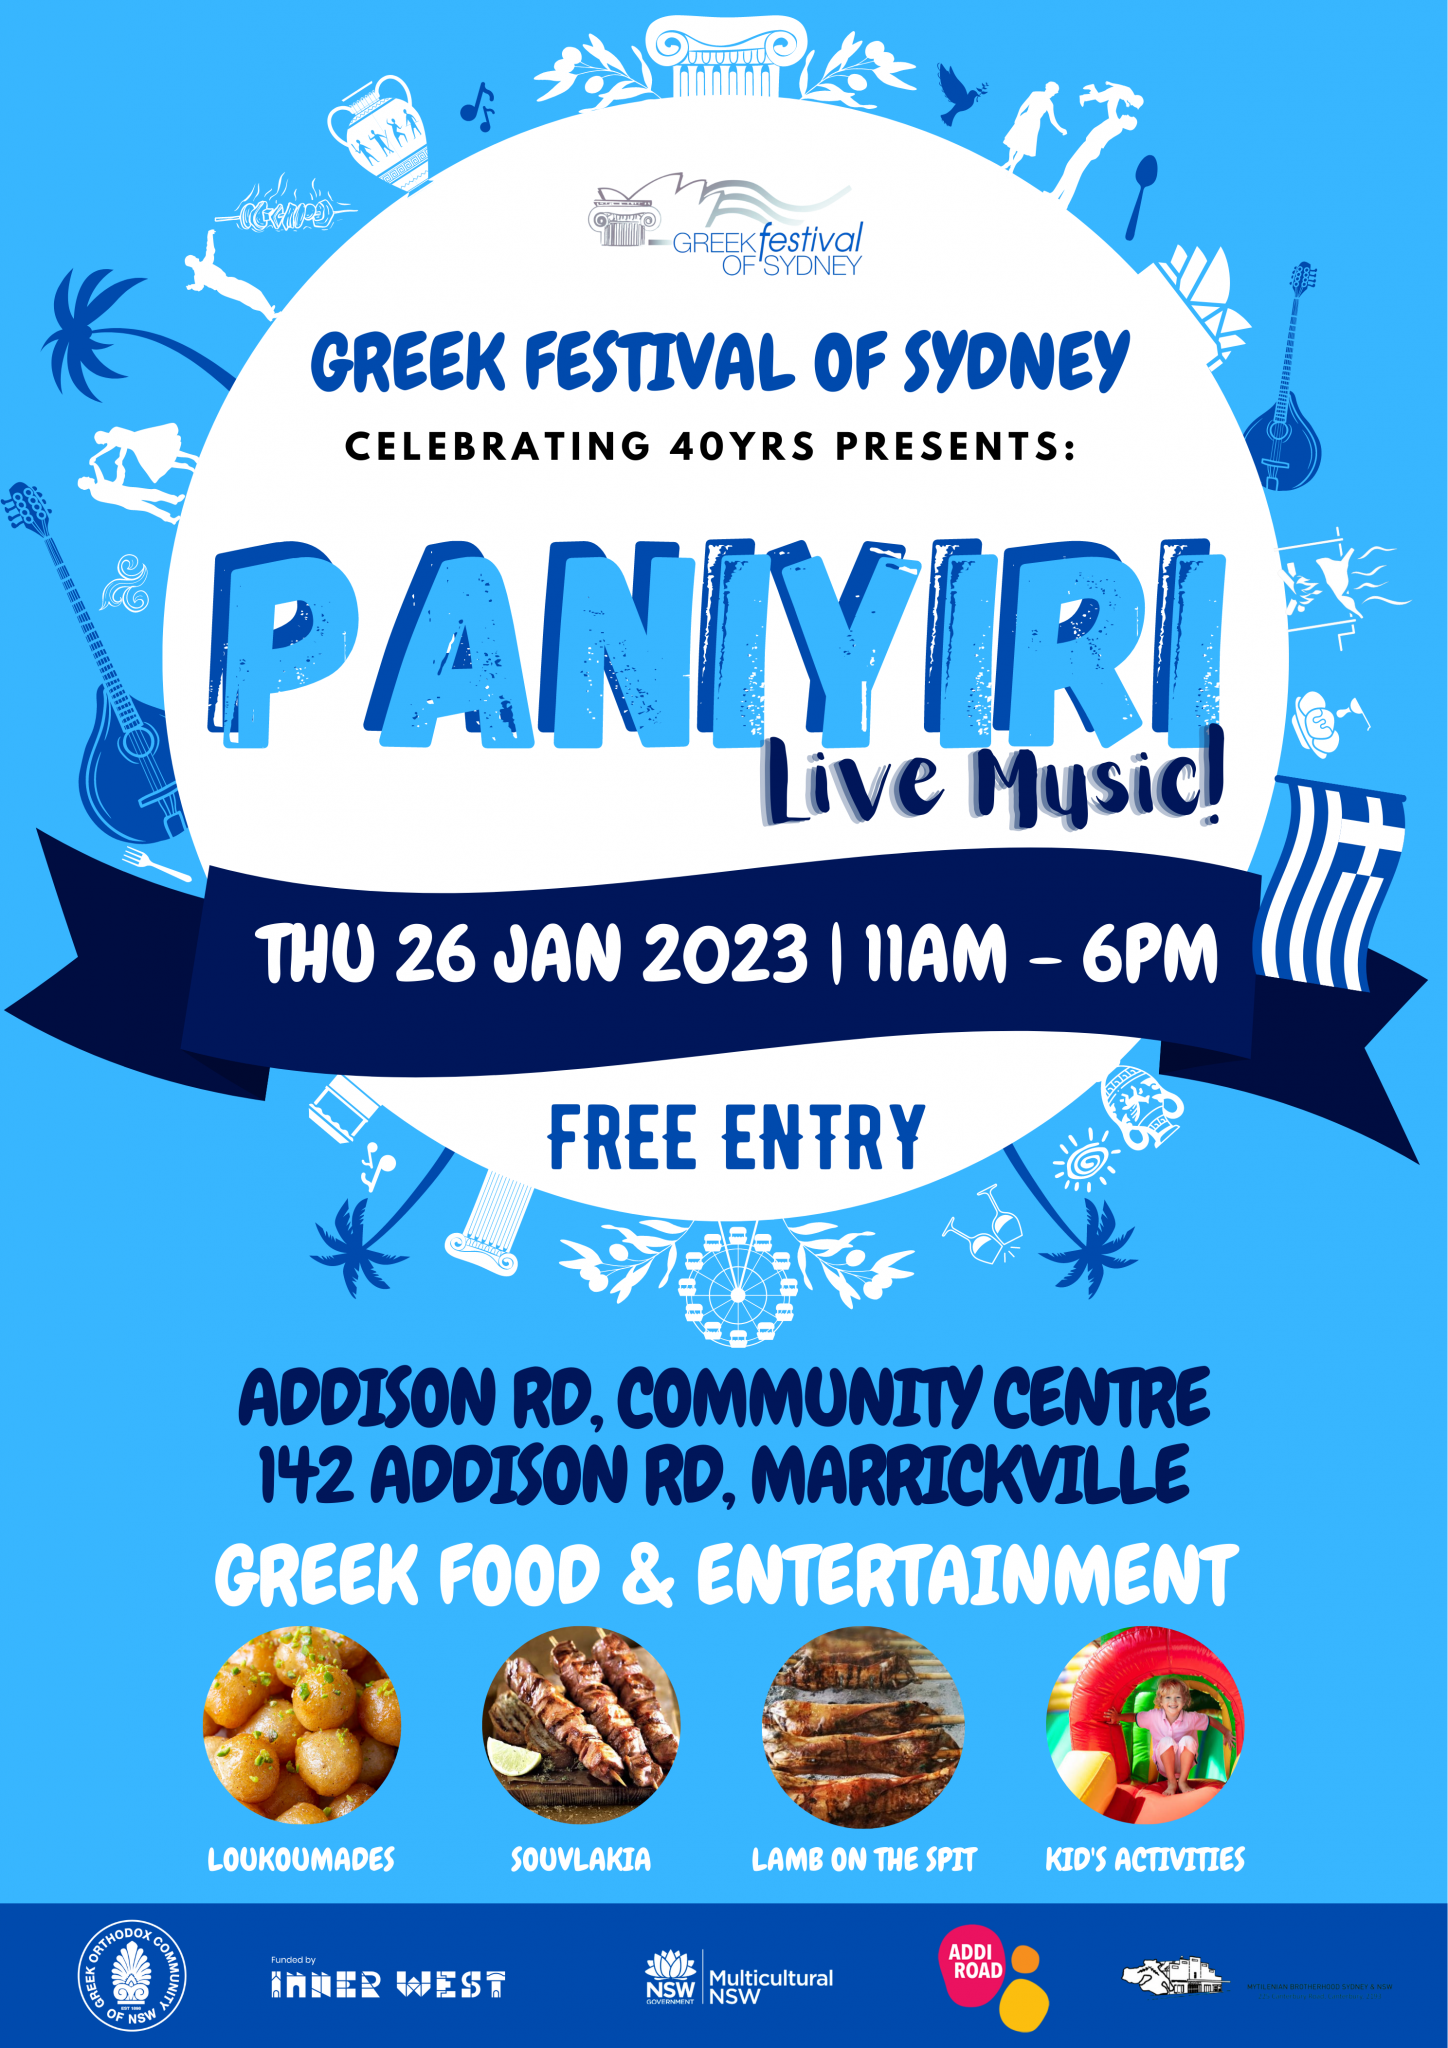 Greek Festival of Sydney 3 Major Festivals as part of the Cultural